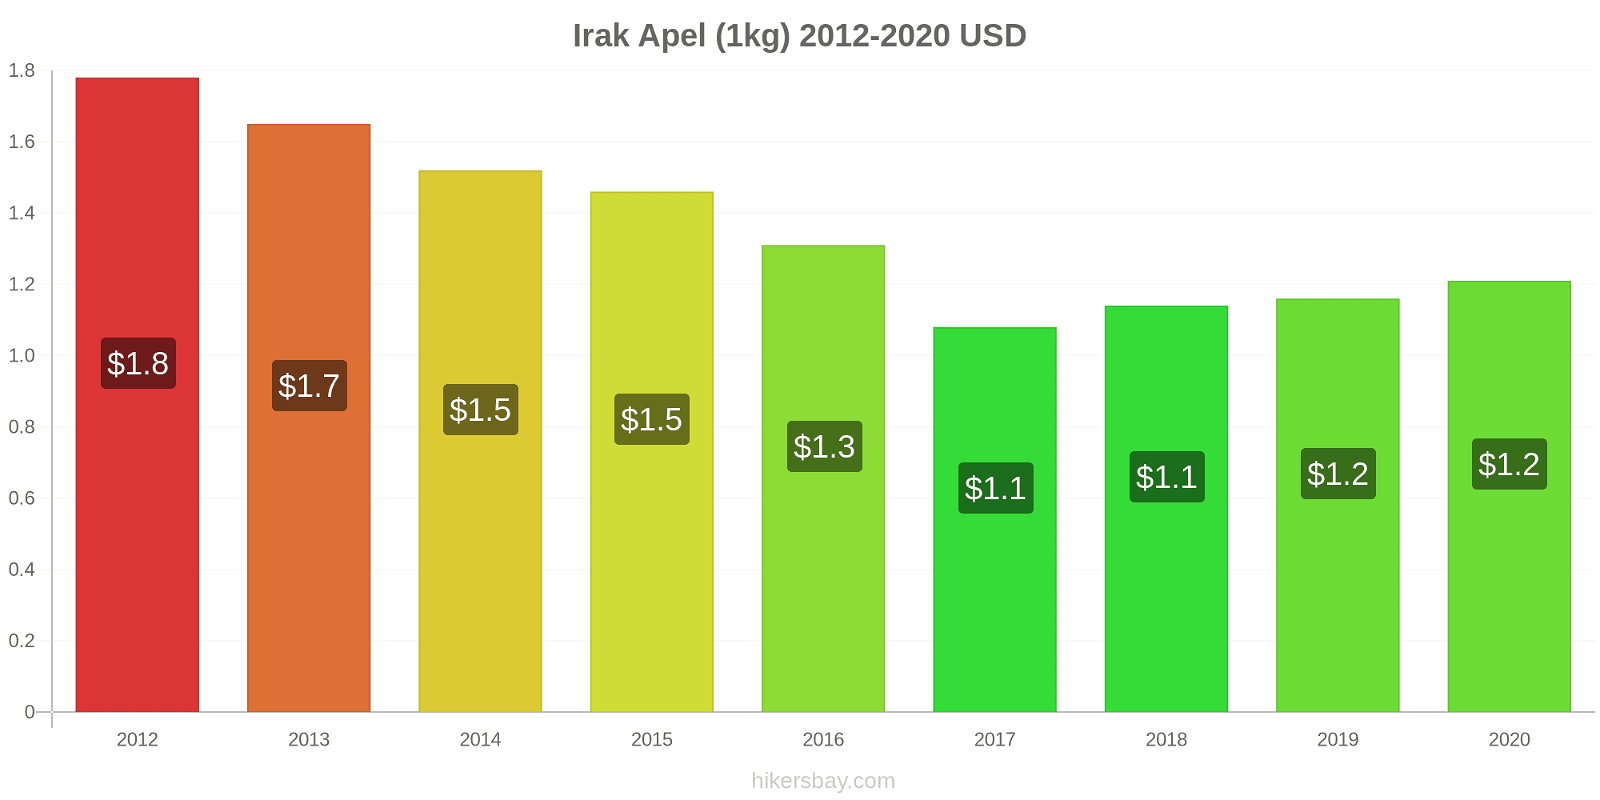 Irak perubahan harga Apel (1kg) hikersbay.com